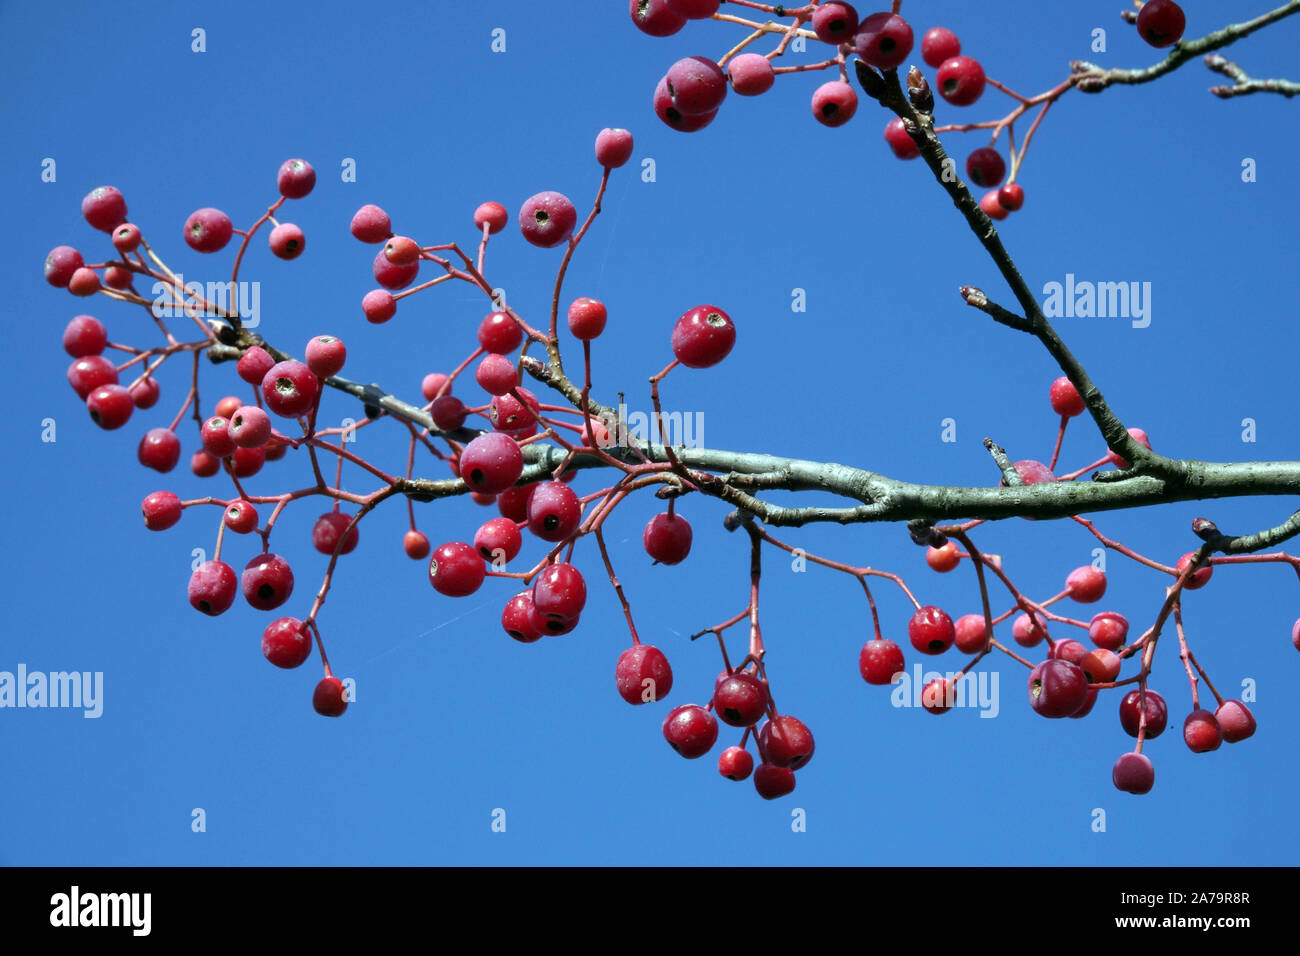 Sorbus zahlbruckneri, red berries against blue sky branch with berries Stock Photo